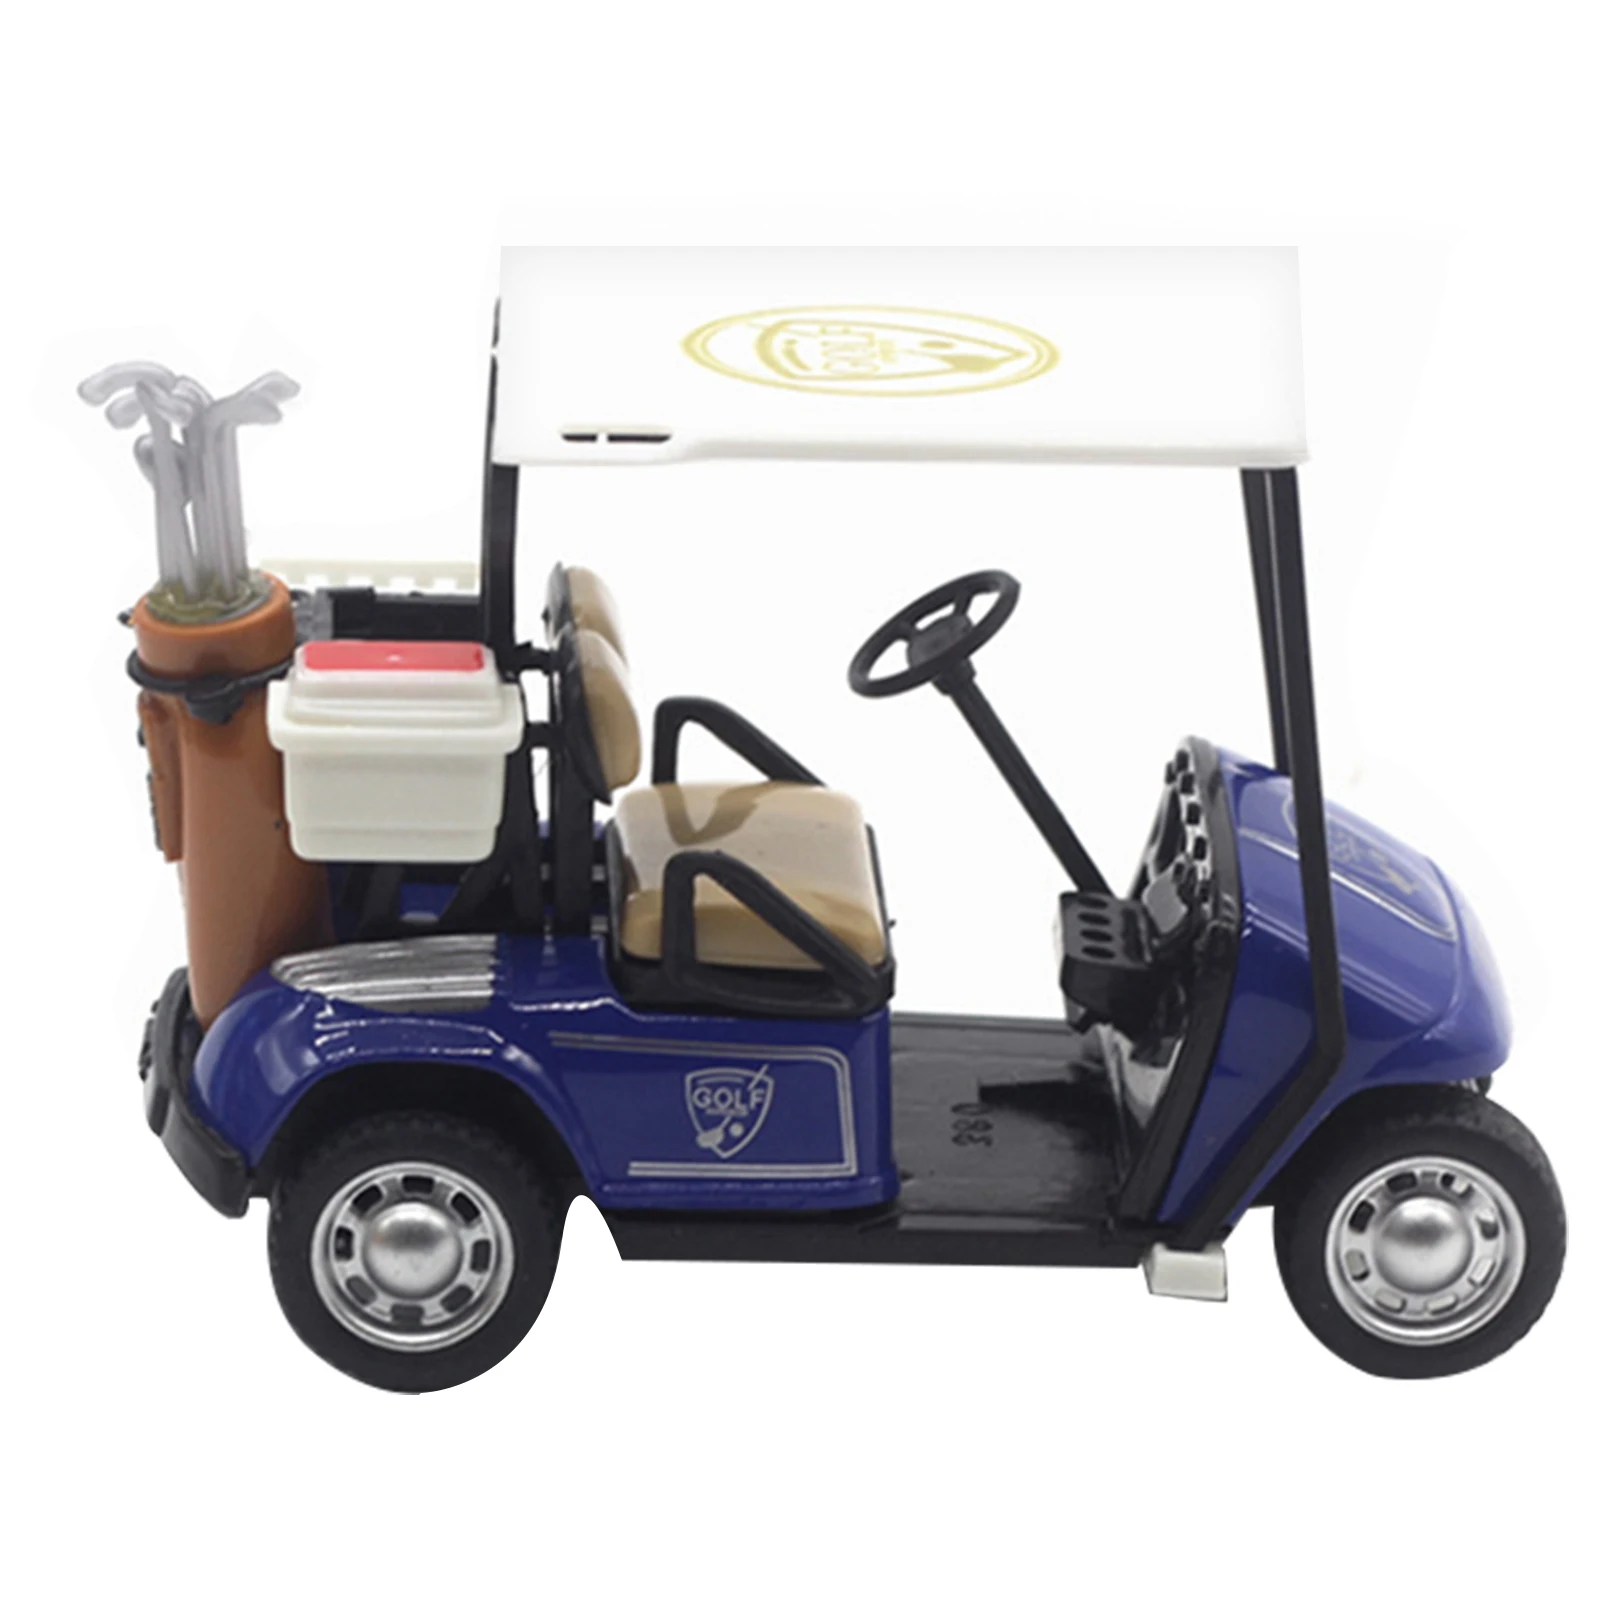 Diecast Metal Golf Cart Models Baby Car Toy High Imitation Golf